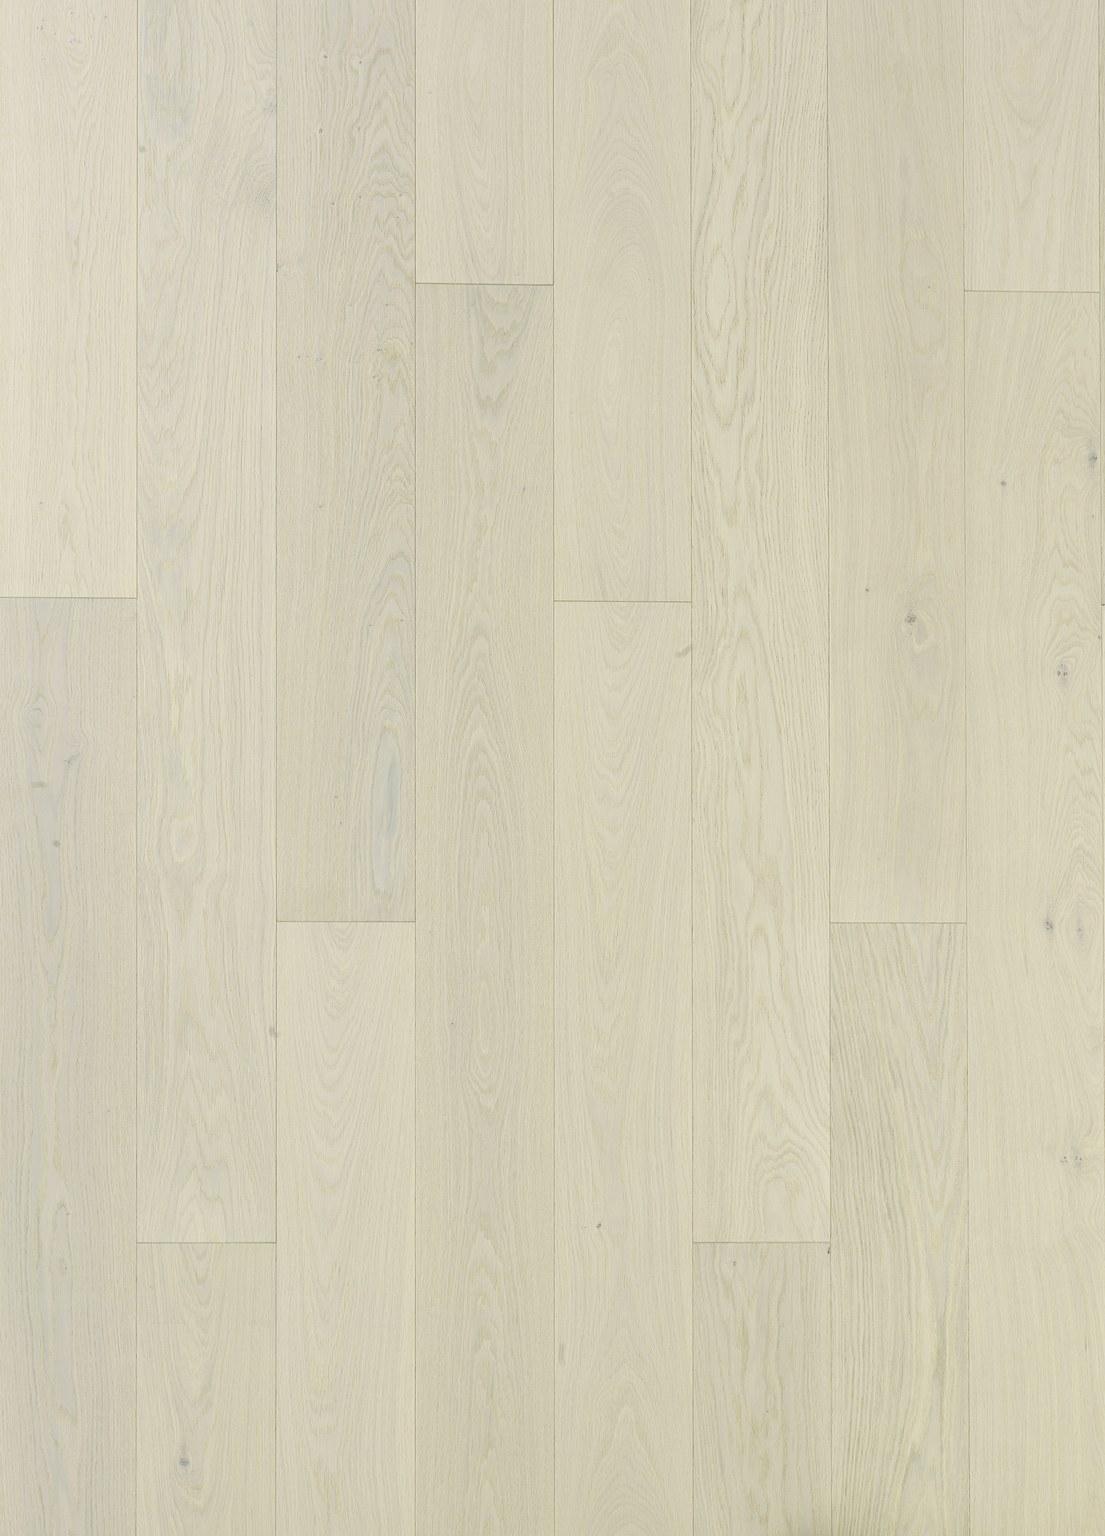 Timberwise-parketti-puulattia-wooden-floor-parquet-Tammi-Oak-white-cream